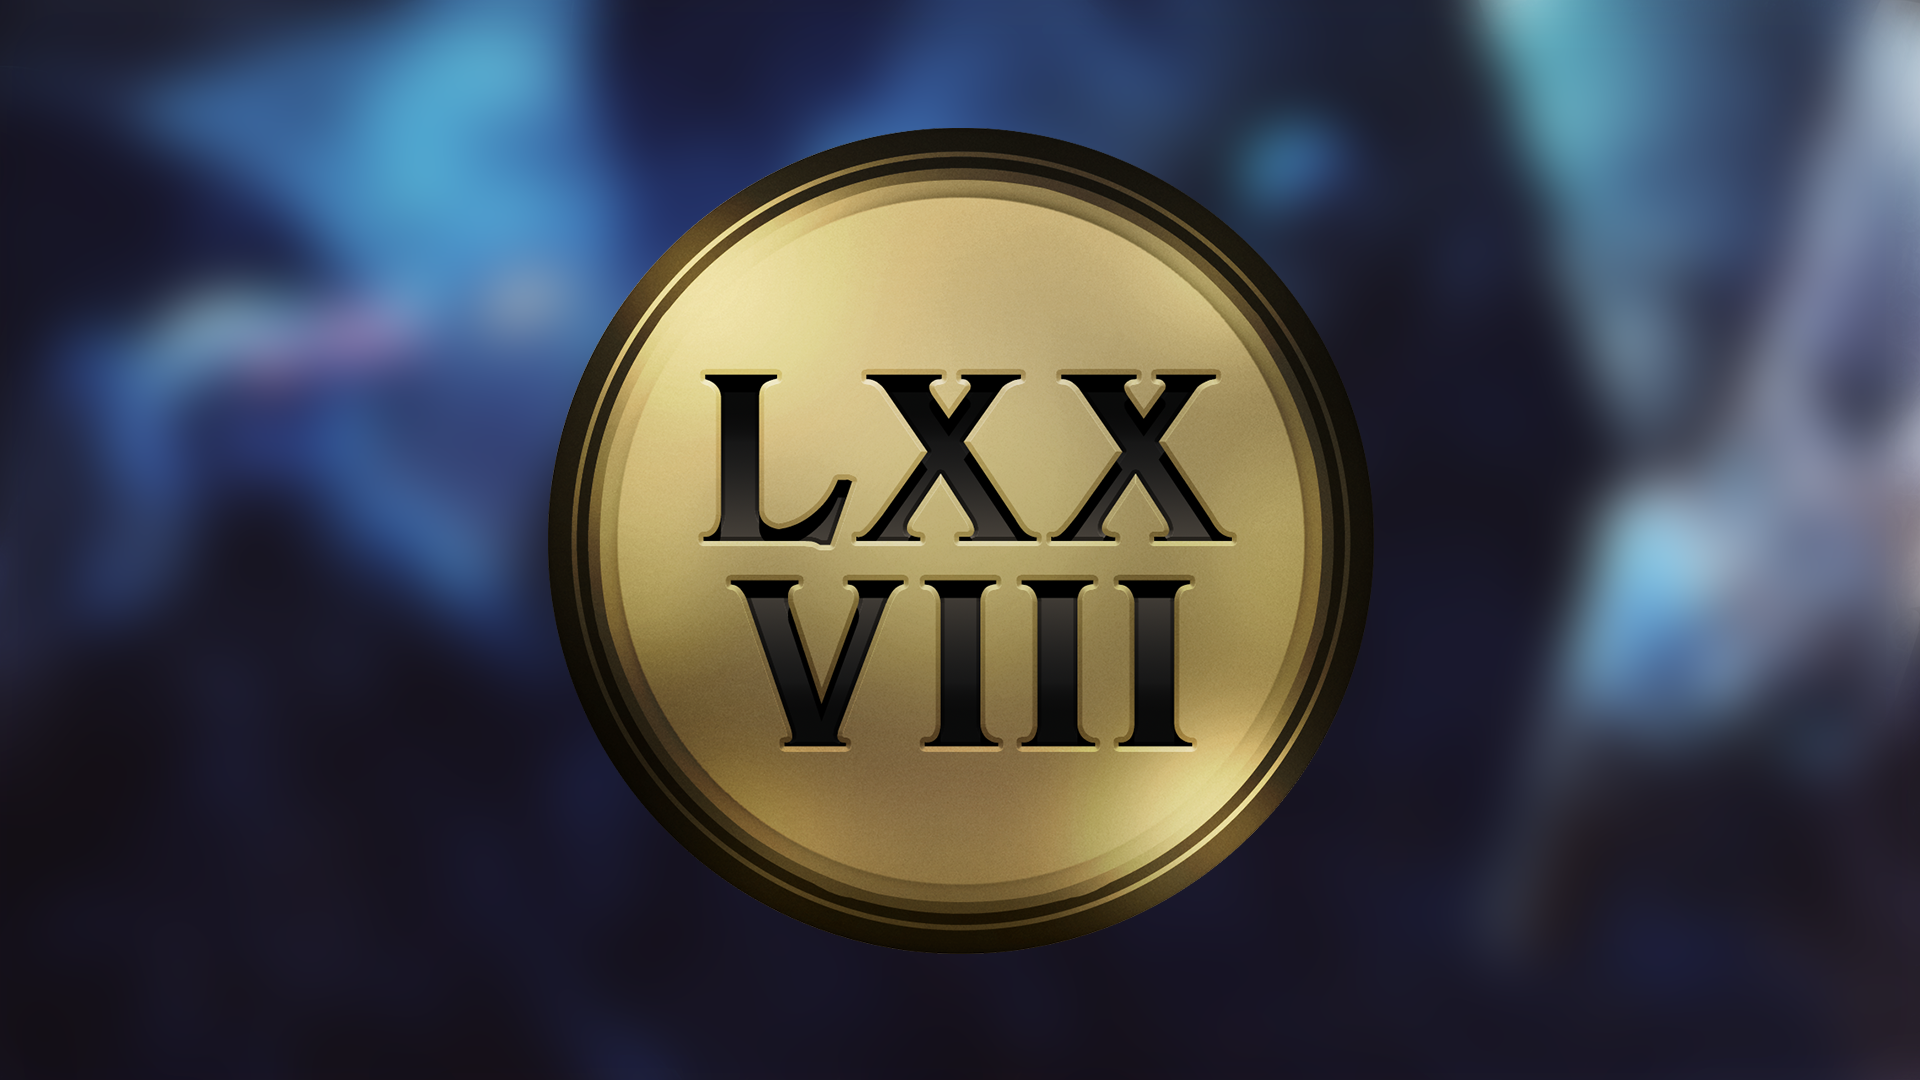 Icon for LXXVIII